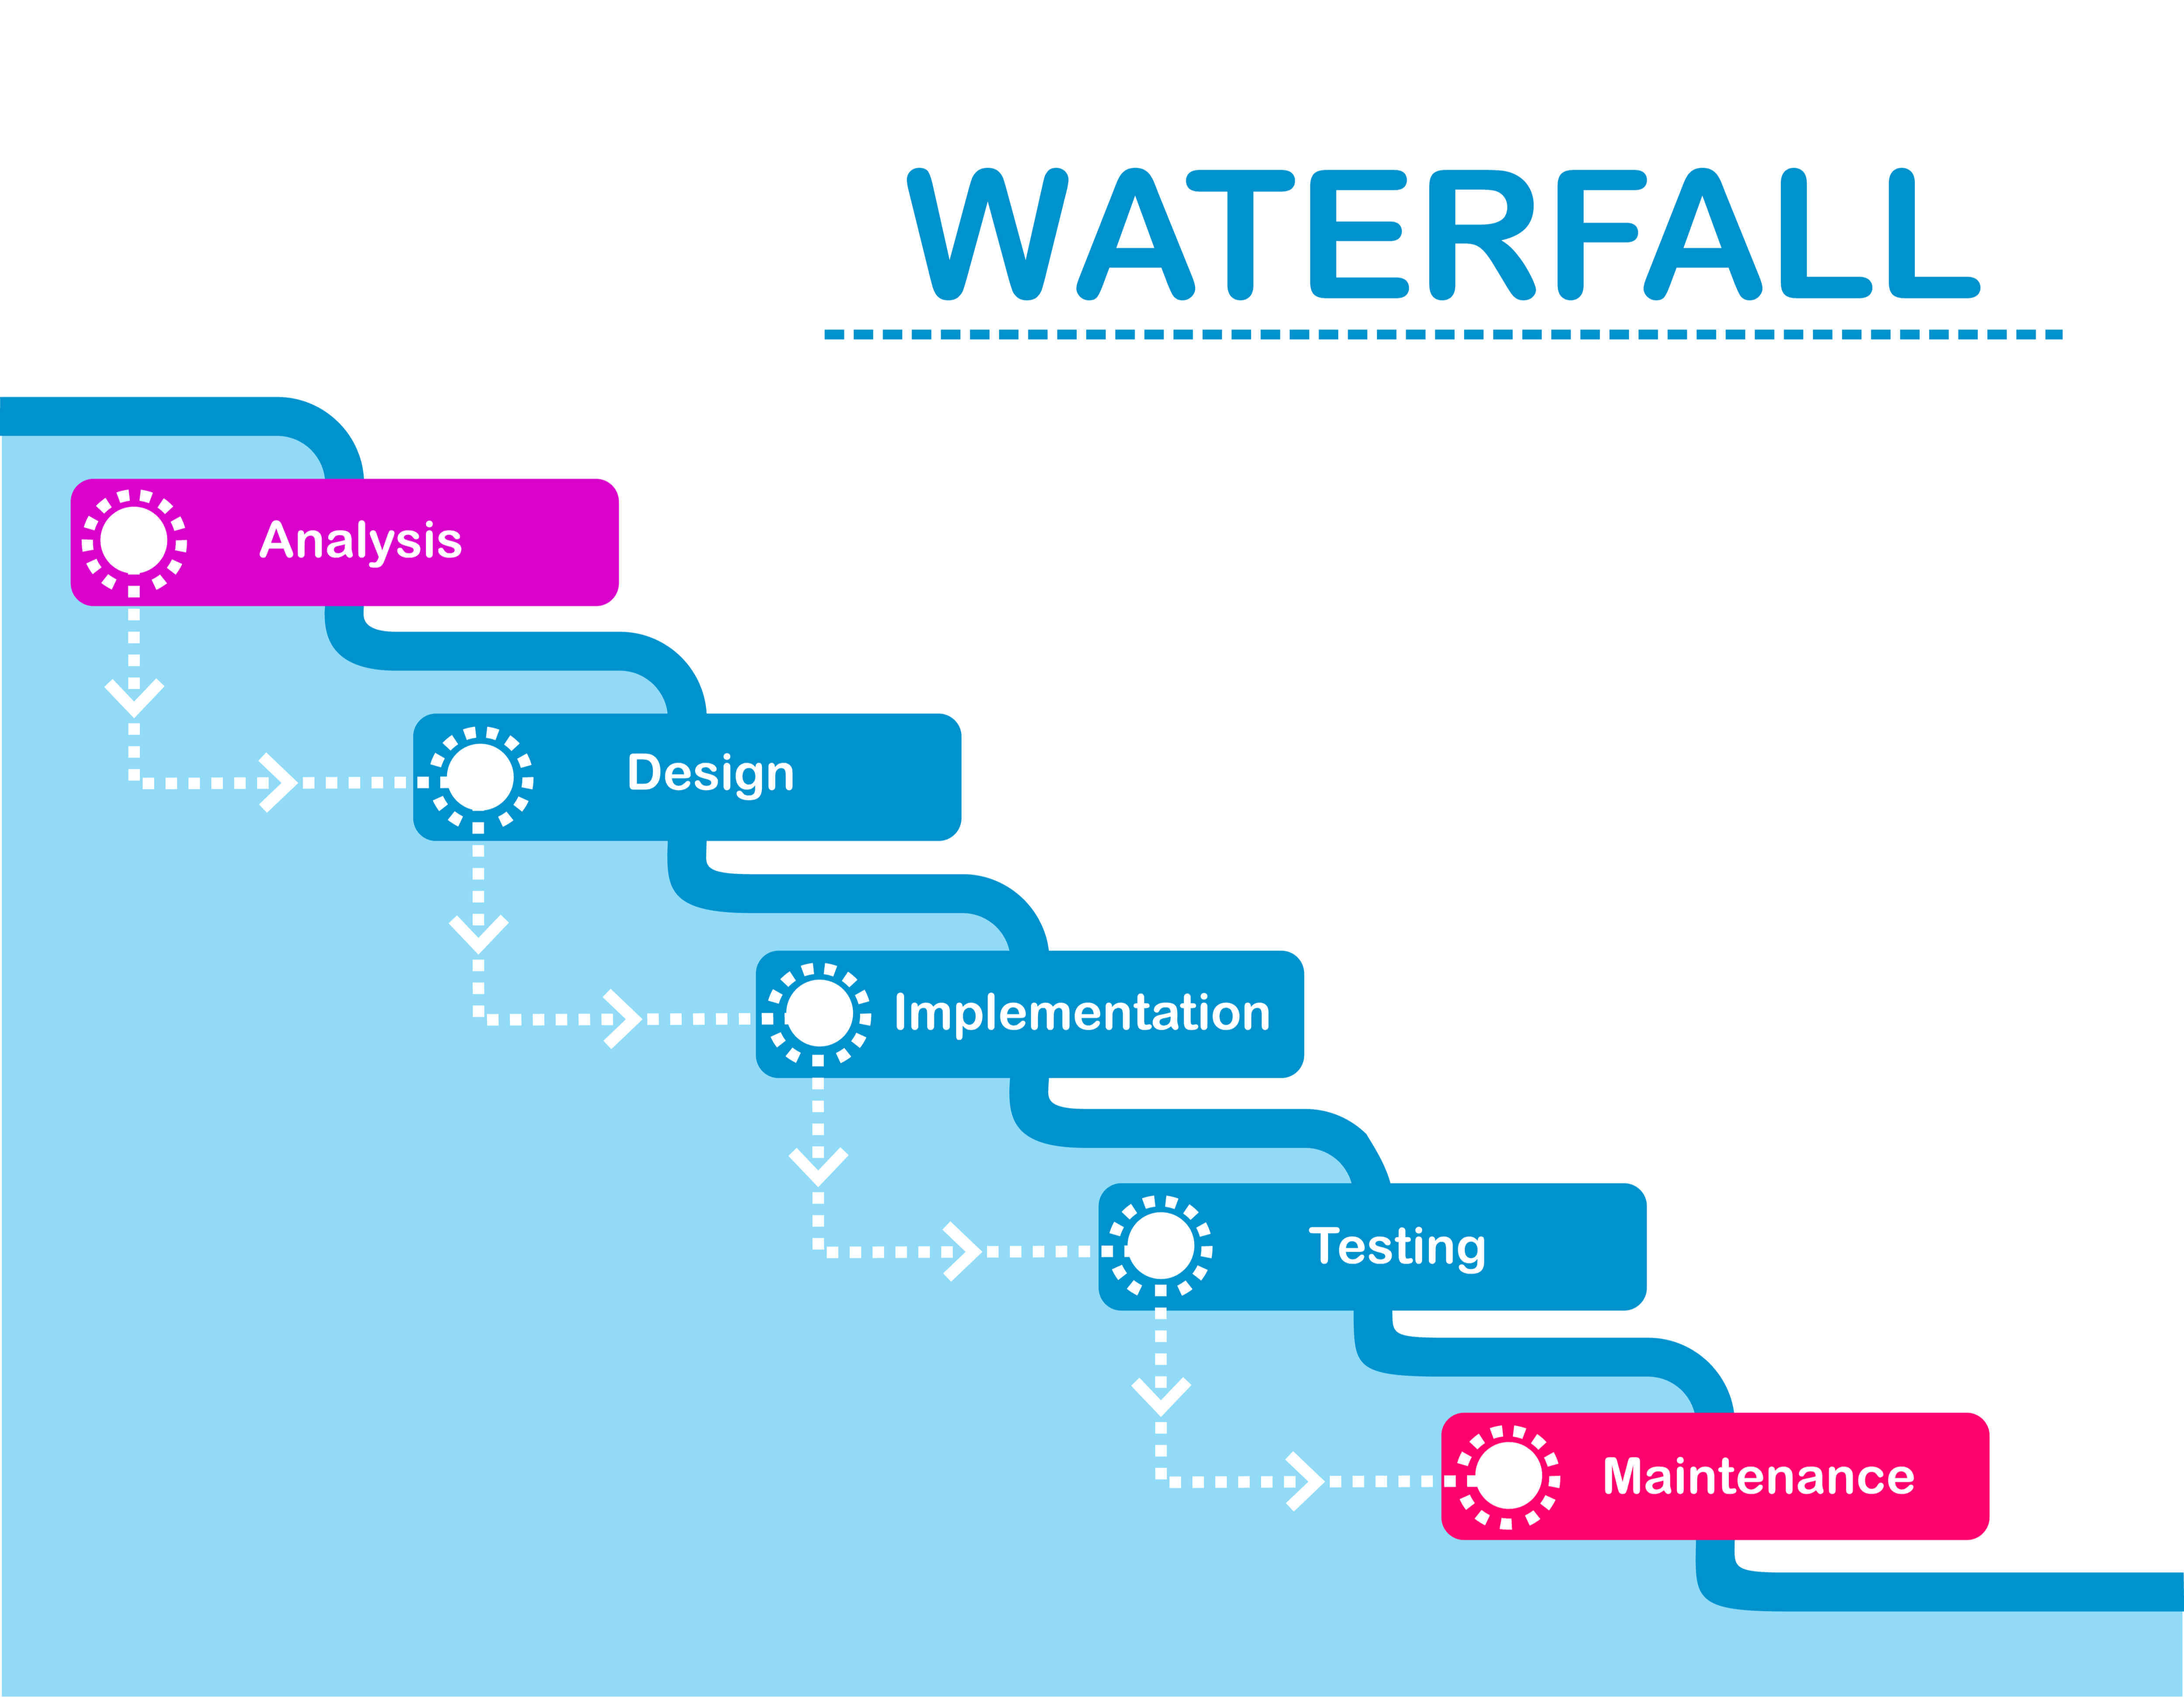 waterfall software